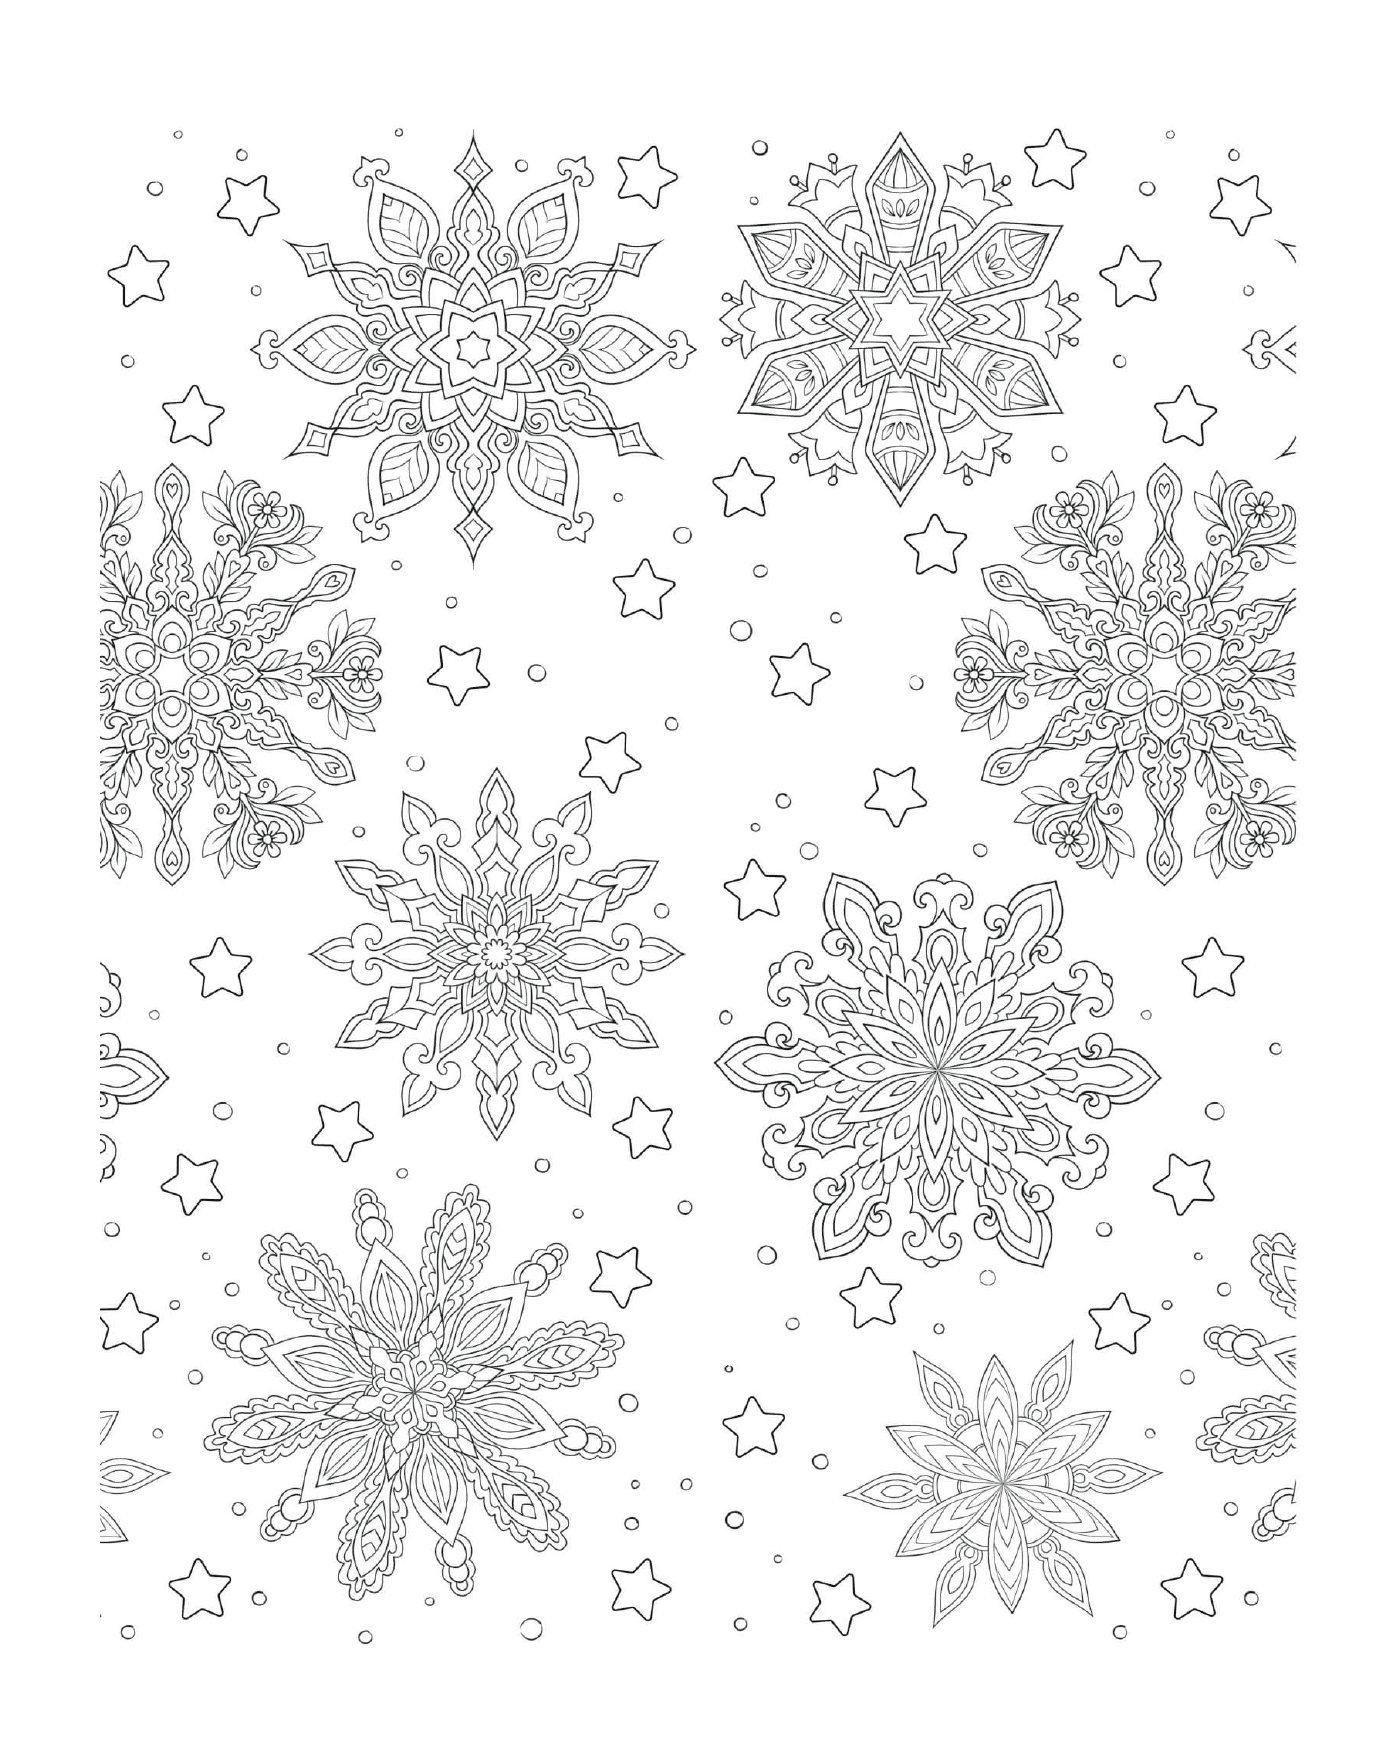  Snowflake pattern 